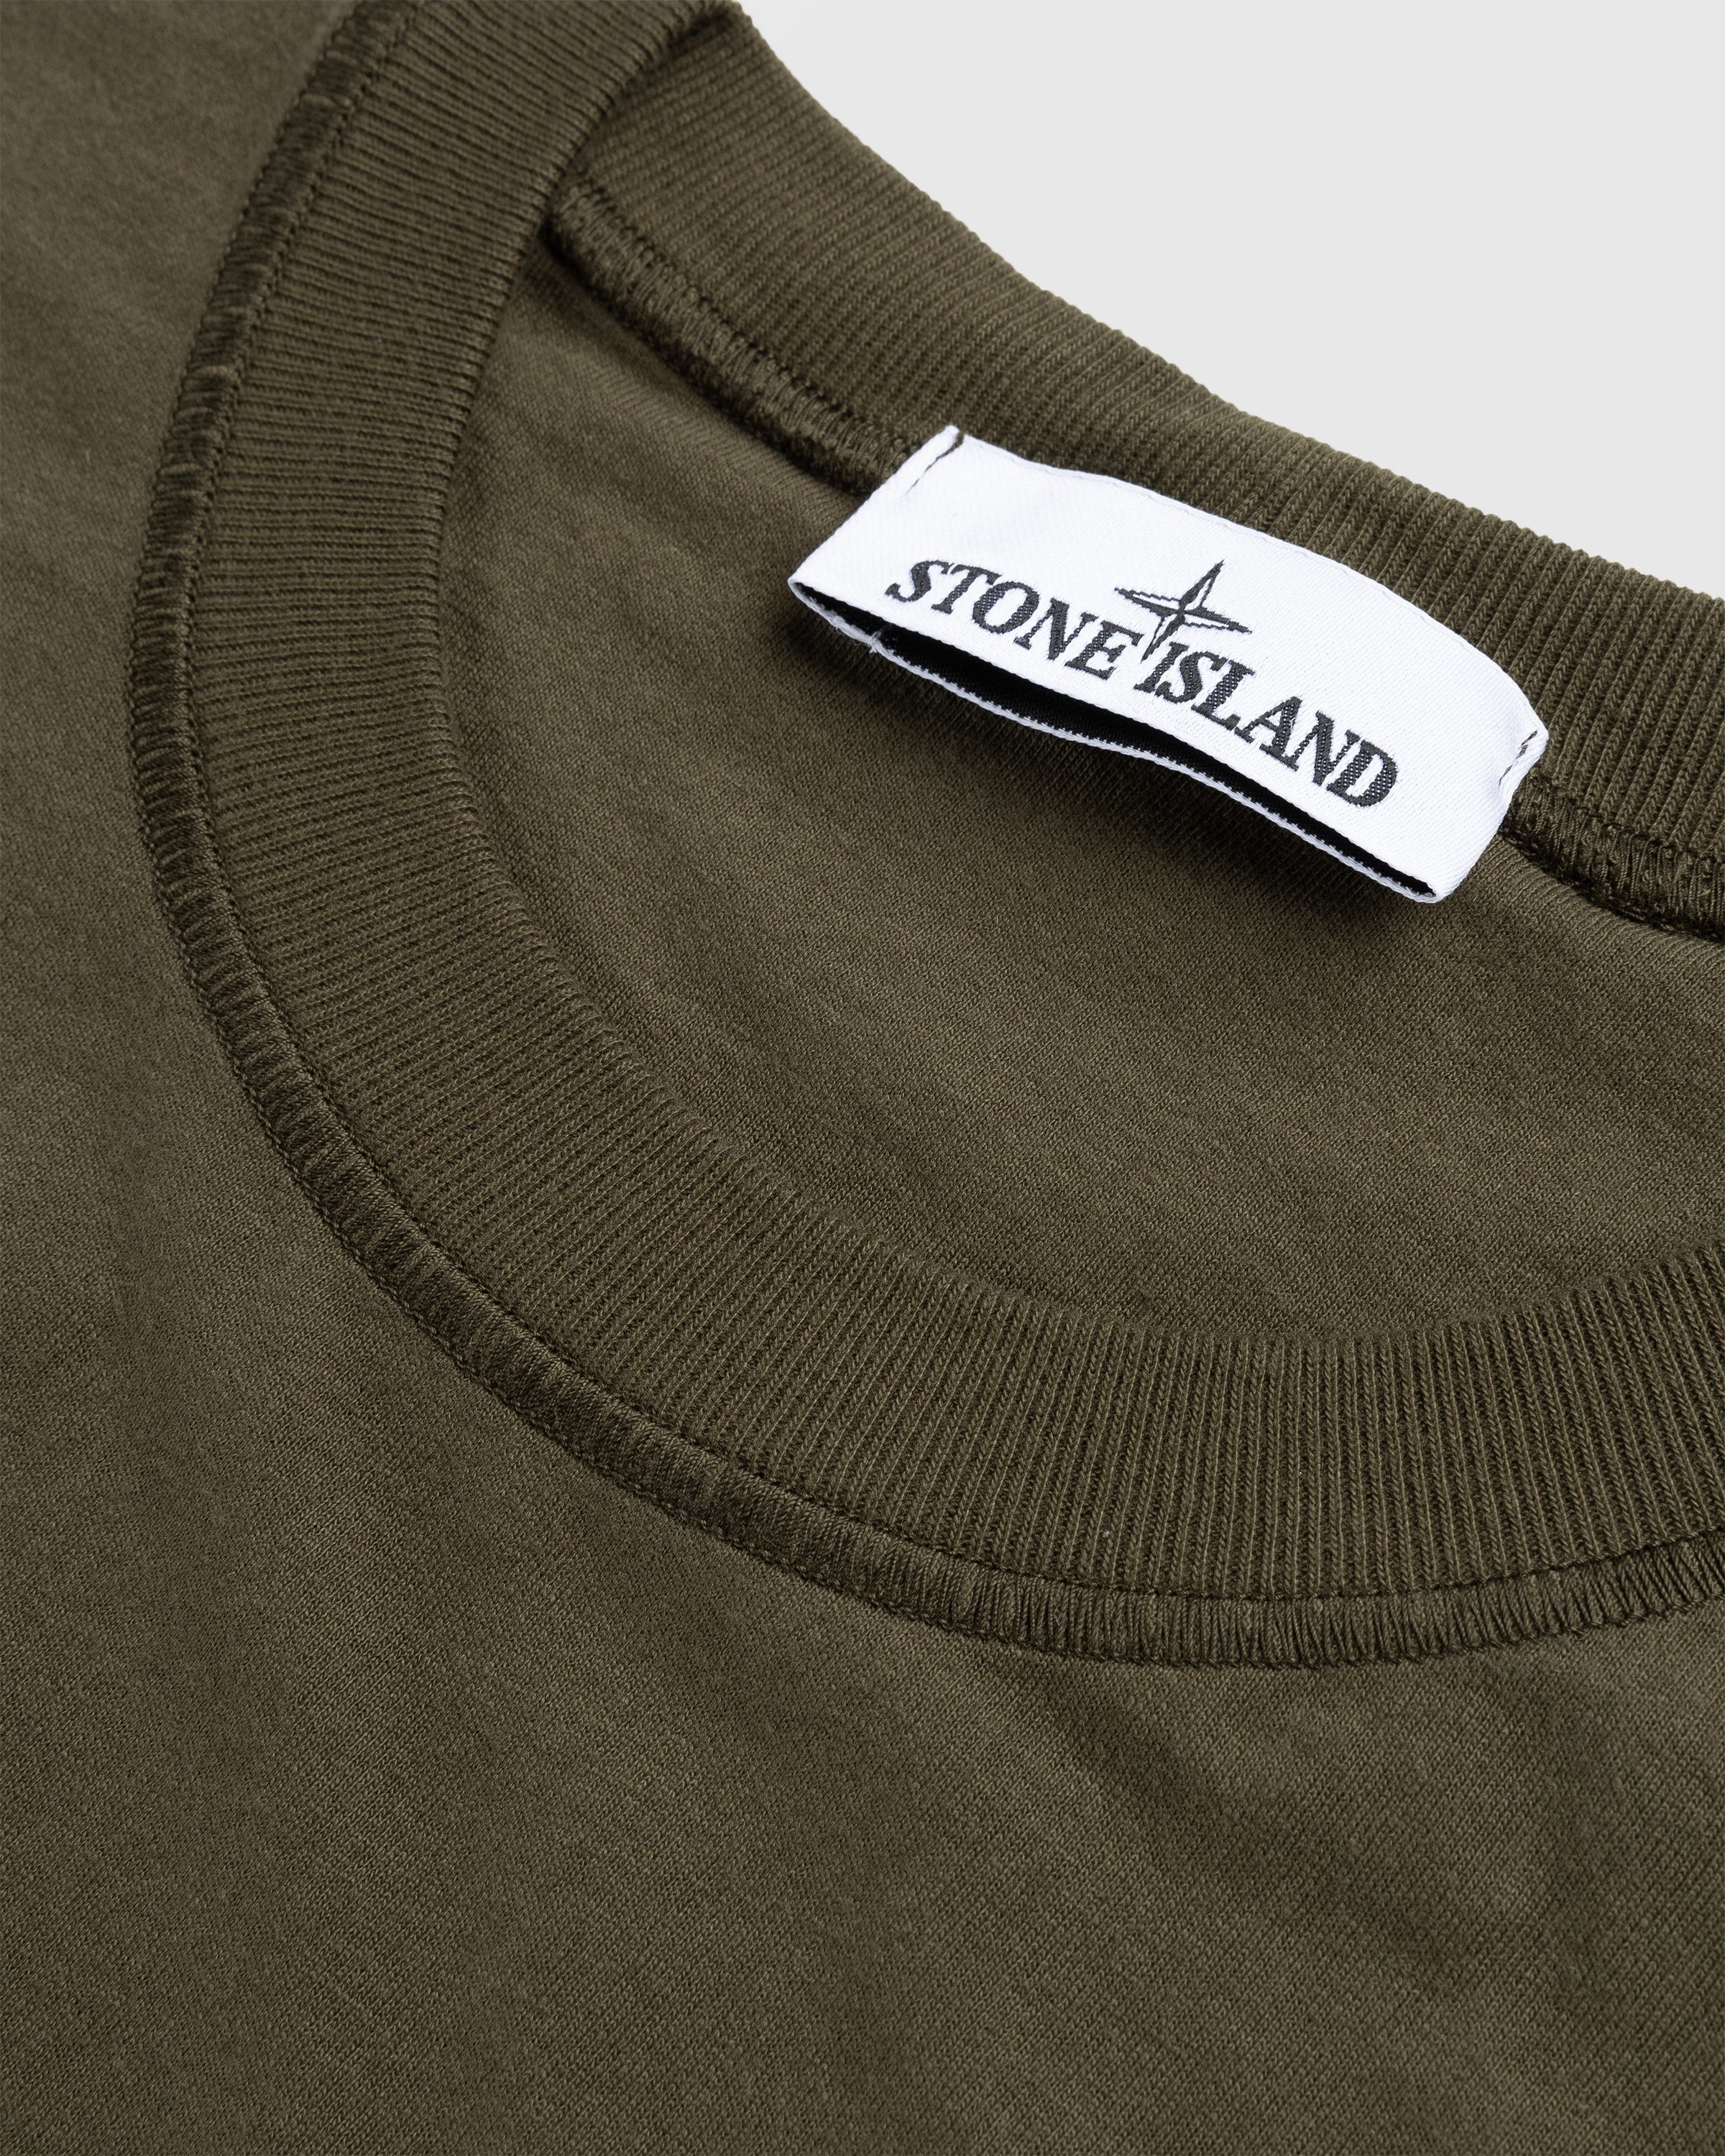 Stone Island – Fissato Longsleeve T-Shirt Olive - T-shirts - Green - Image 6